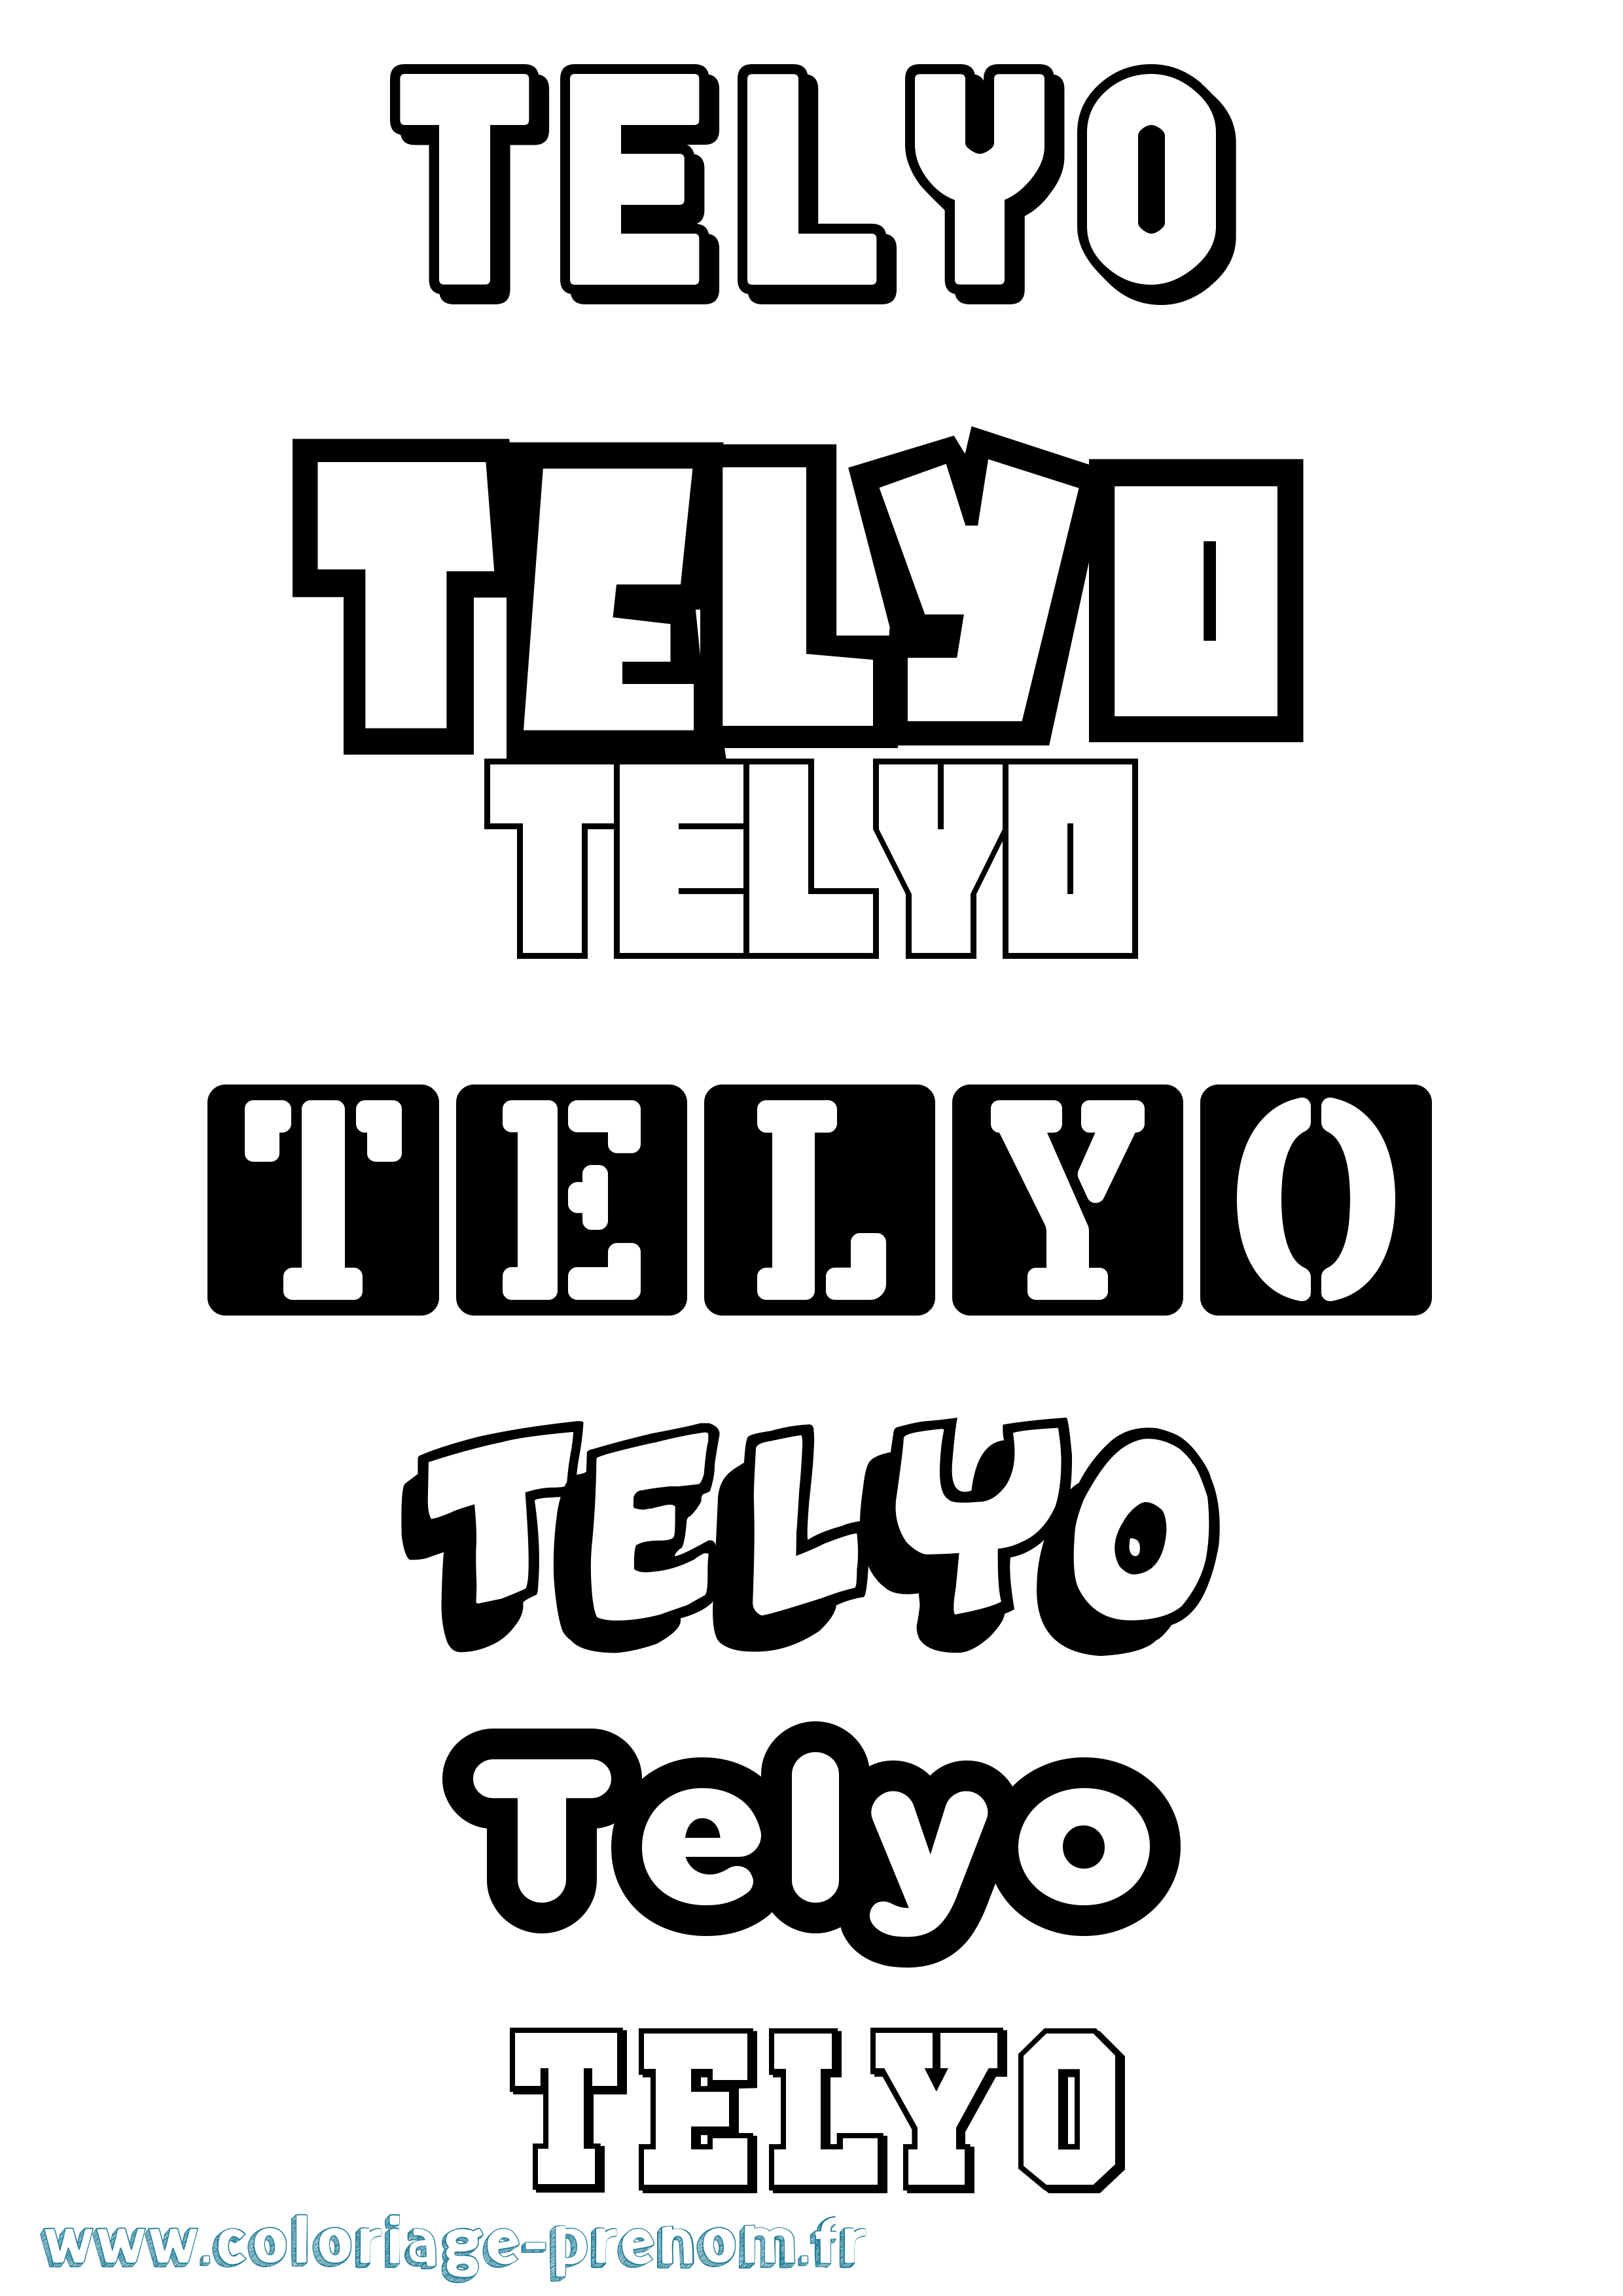 Coloriage prénom Telyo Simple